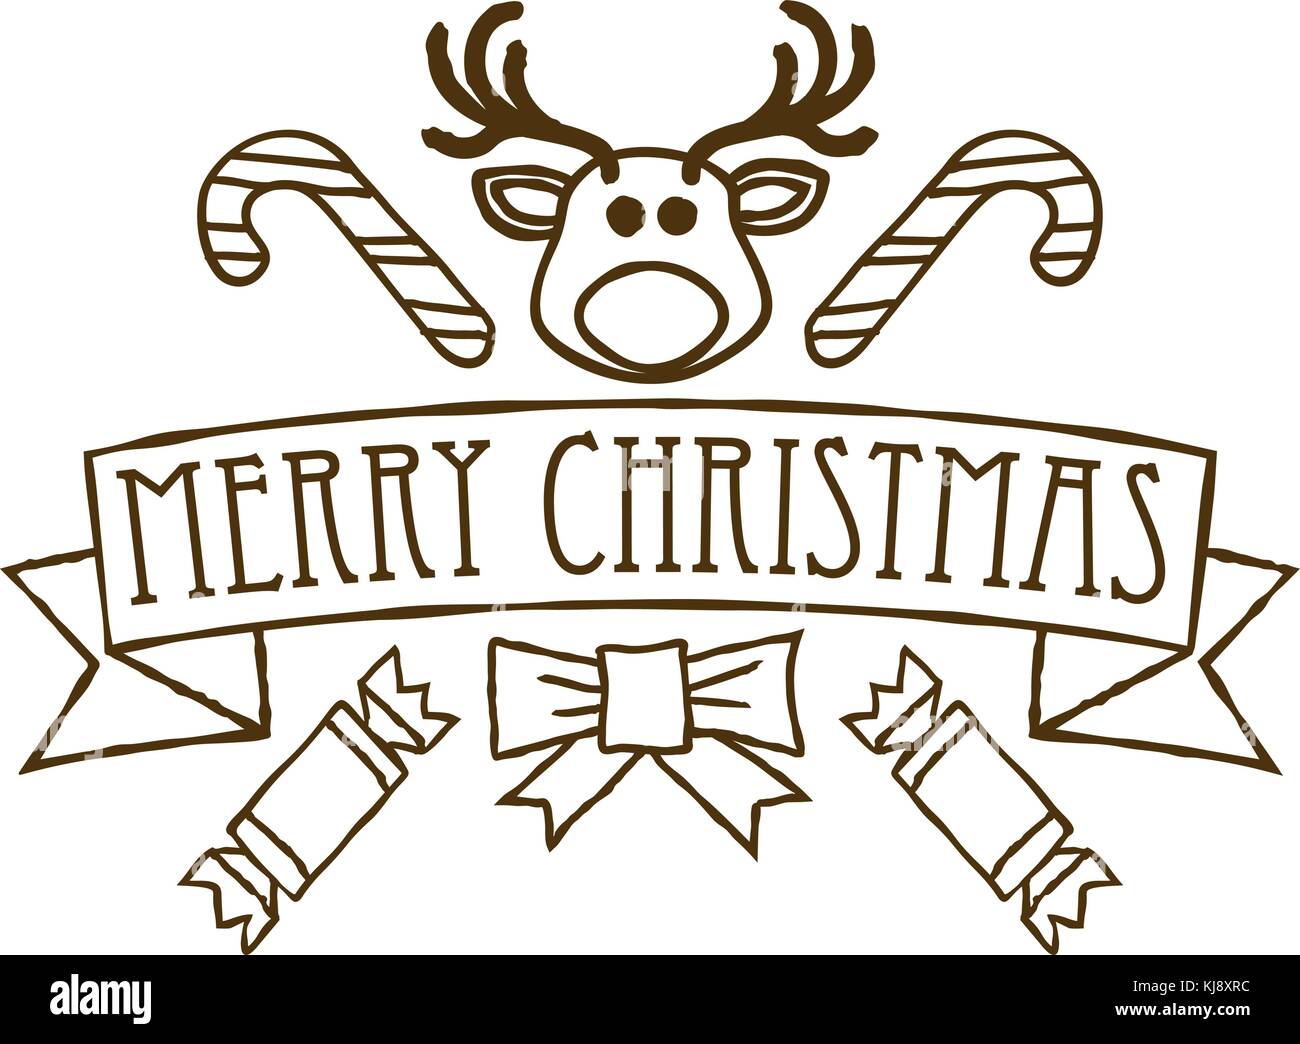 Merry Christmas Greetings Design Stock Vector